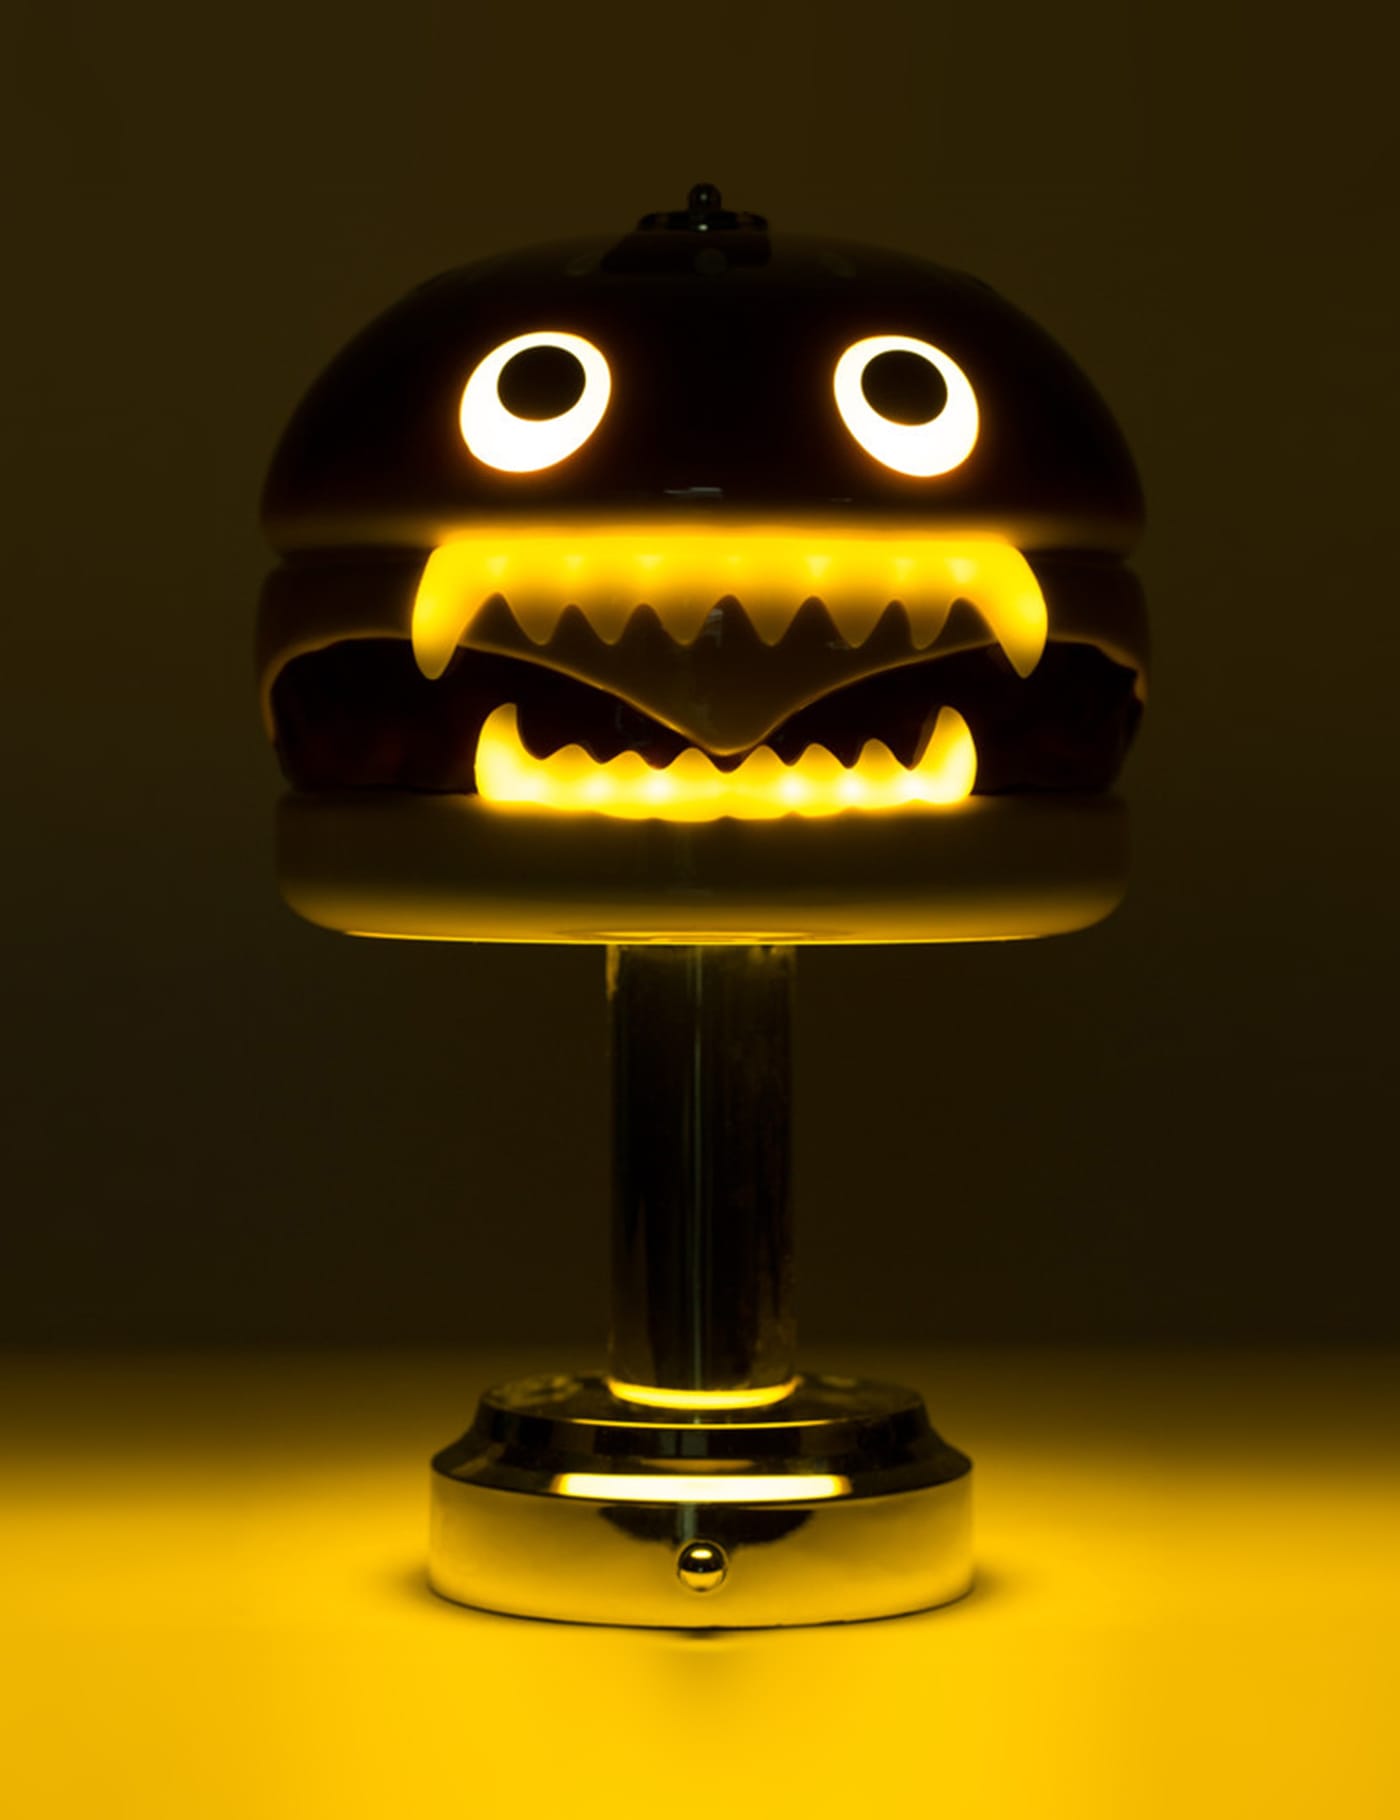 Medicom Toy - Undercover x Medicom Toy Hamburger Lamp | HBX 